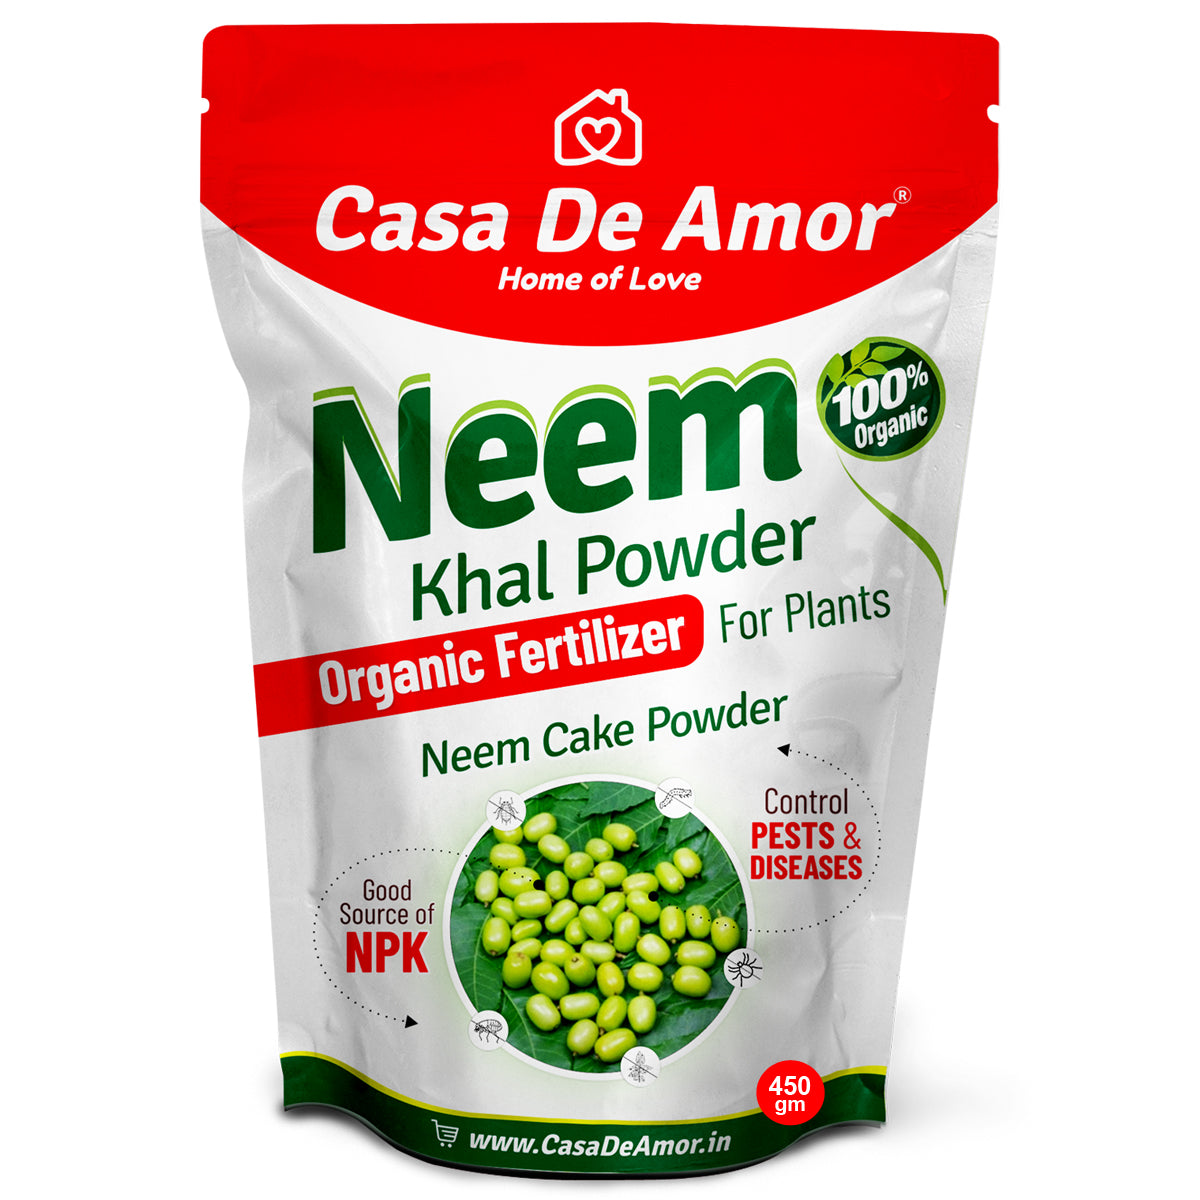 Casa De Amor Neem Cake Powder Organic Fertilizer and Pest Repellent for Plants (Also Known Neem Khal Powder)